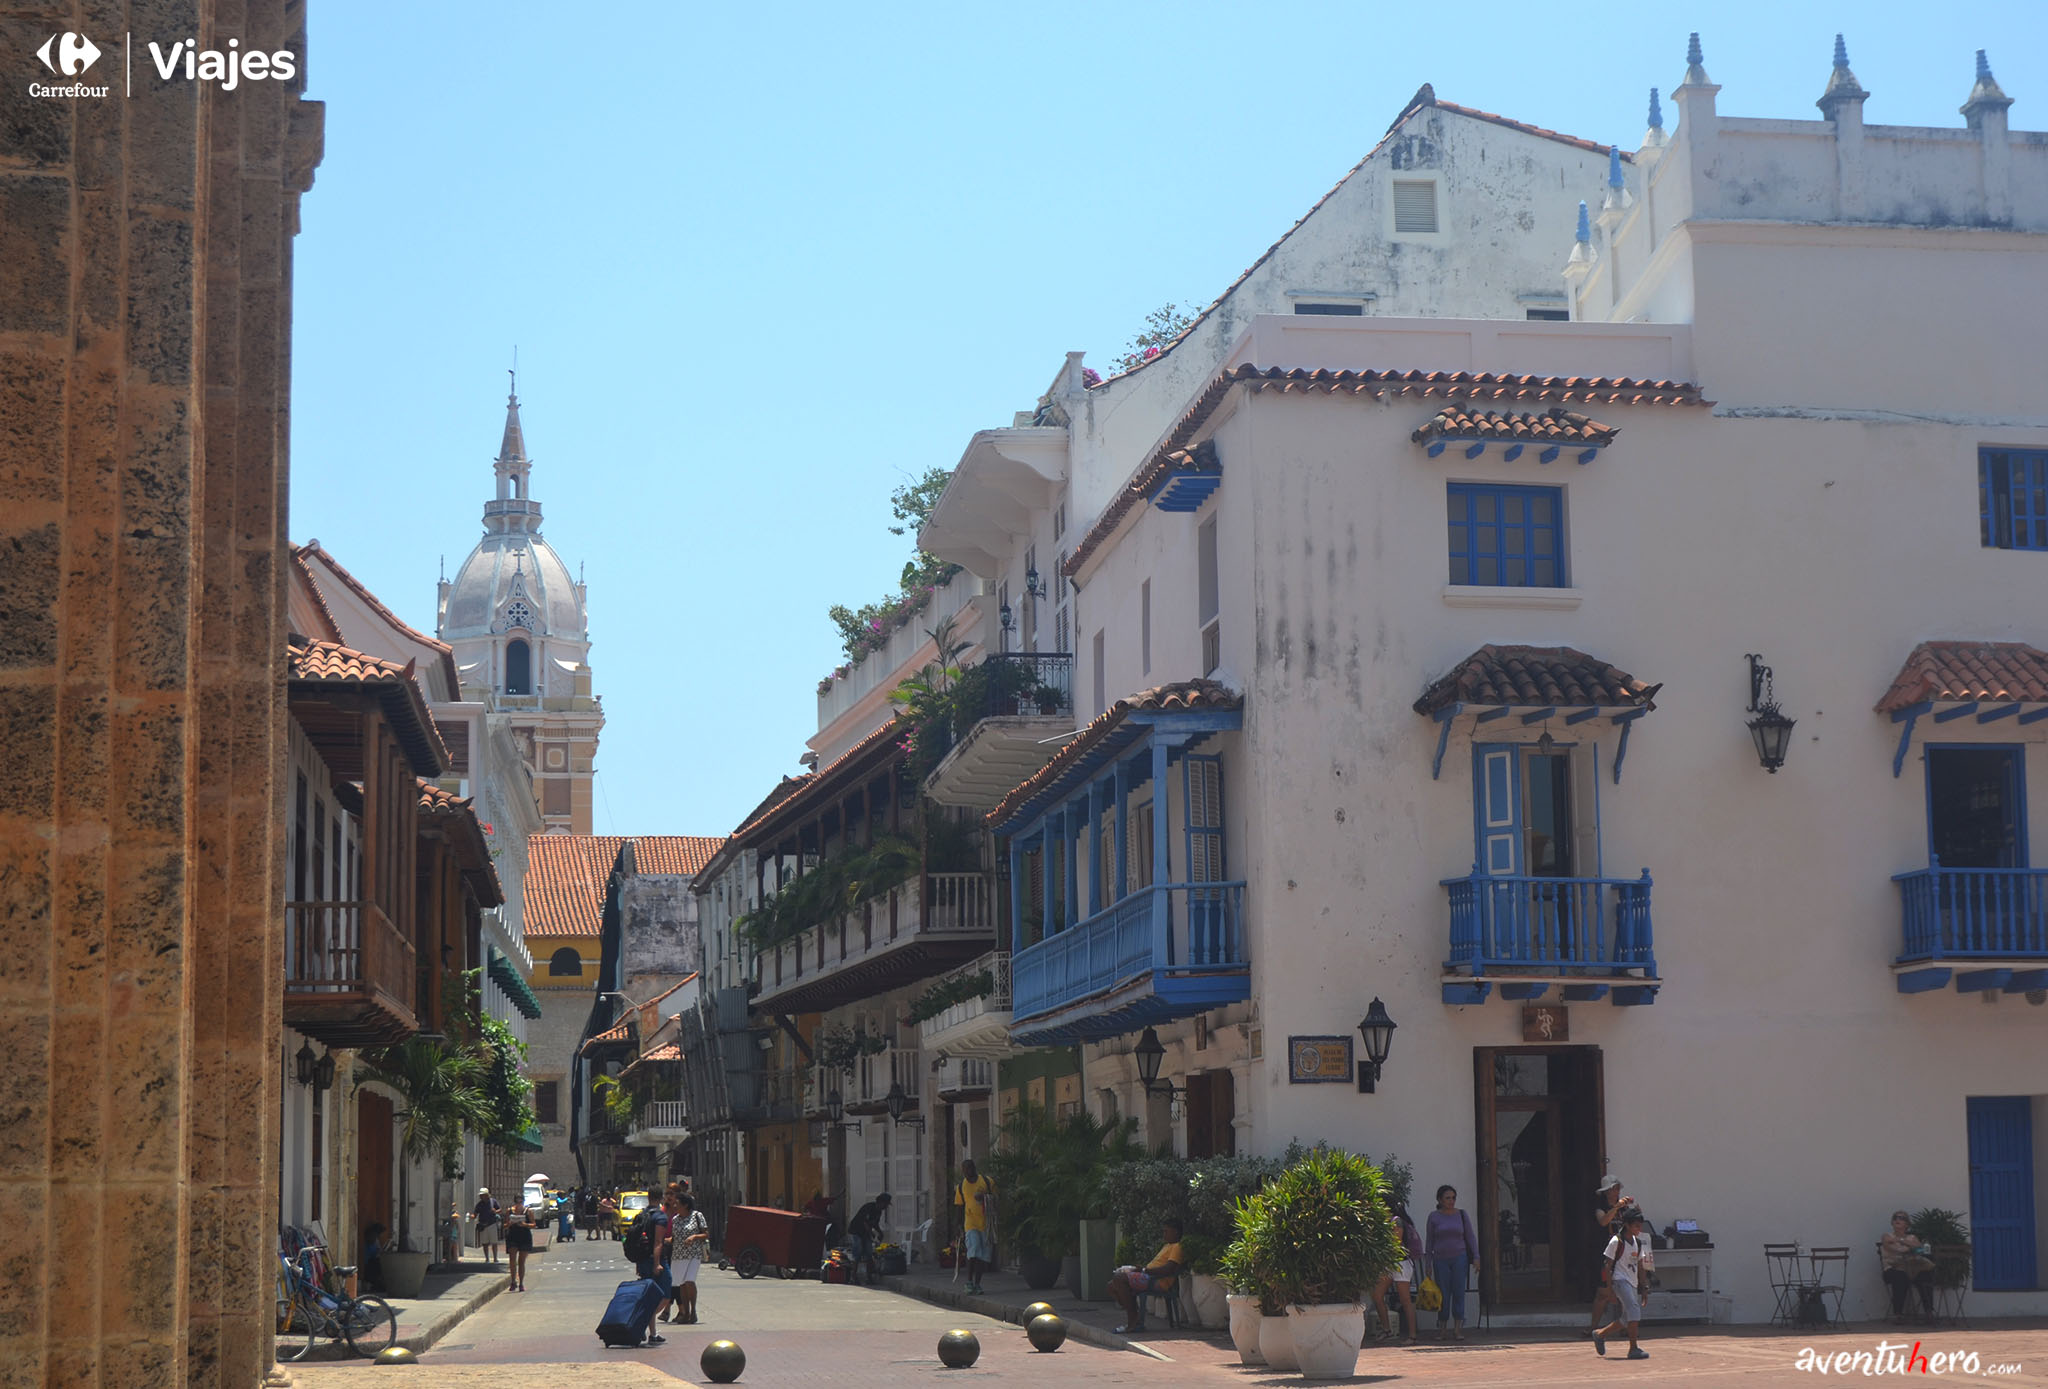  Calles de Cartagena de Indias